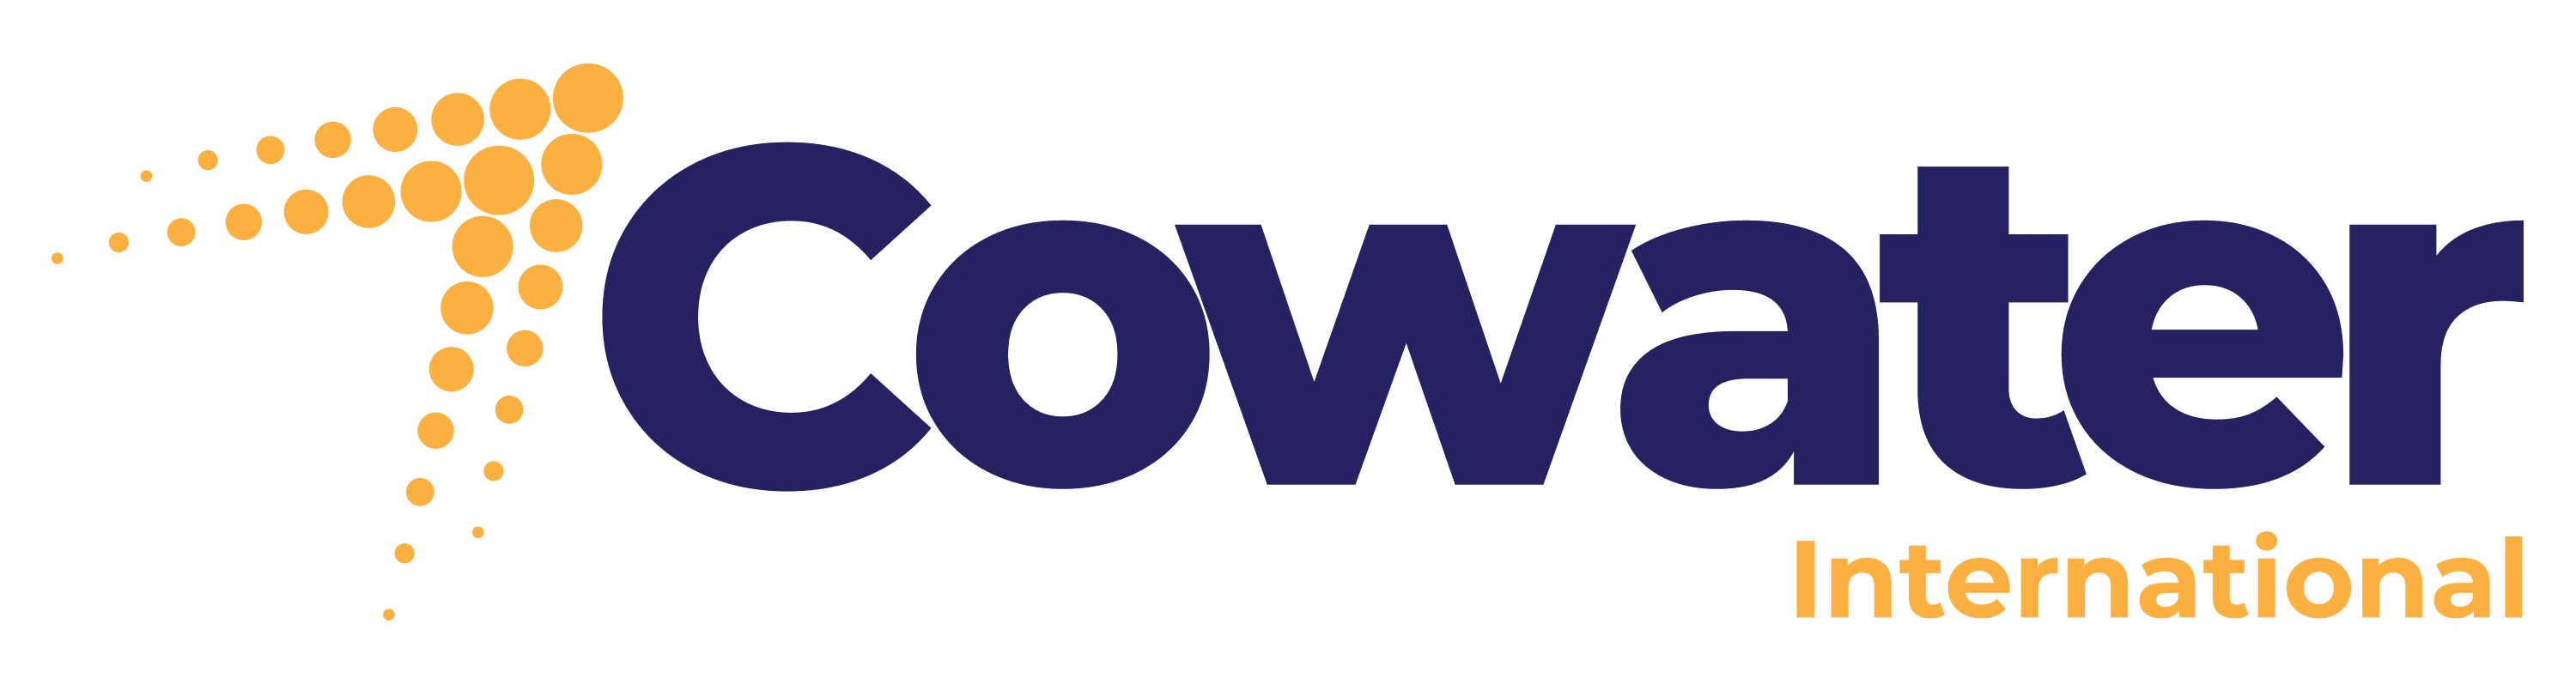 Cowater International - Logo